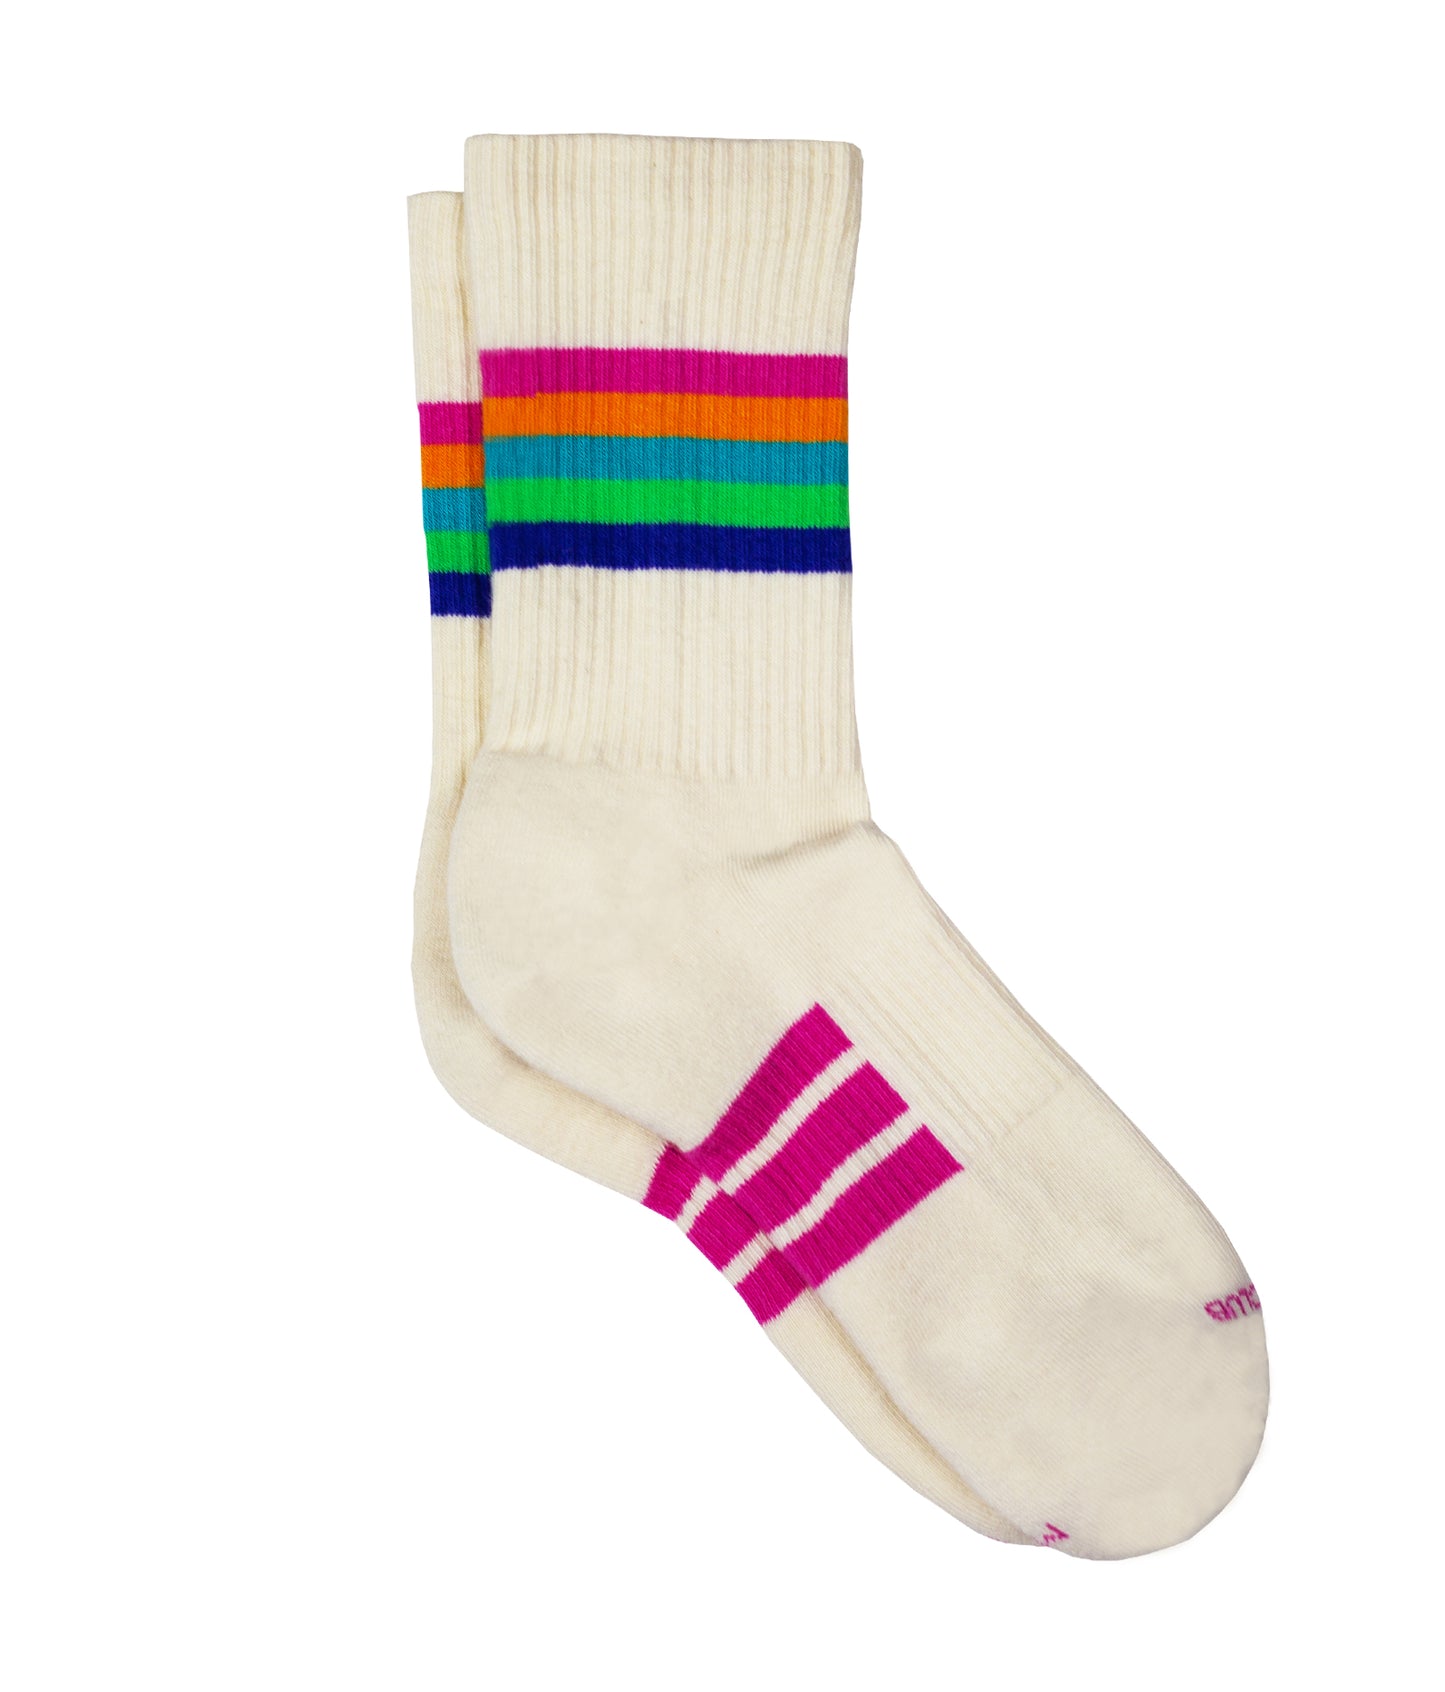 The Allen sock in the natural color variation.